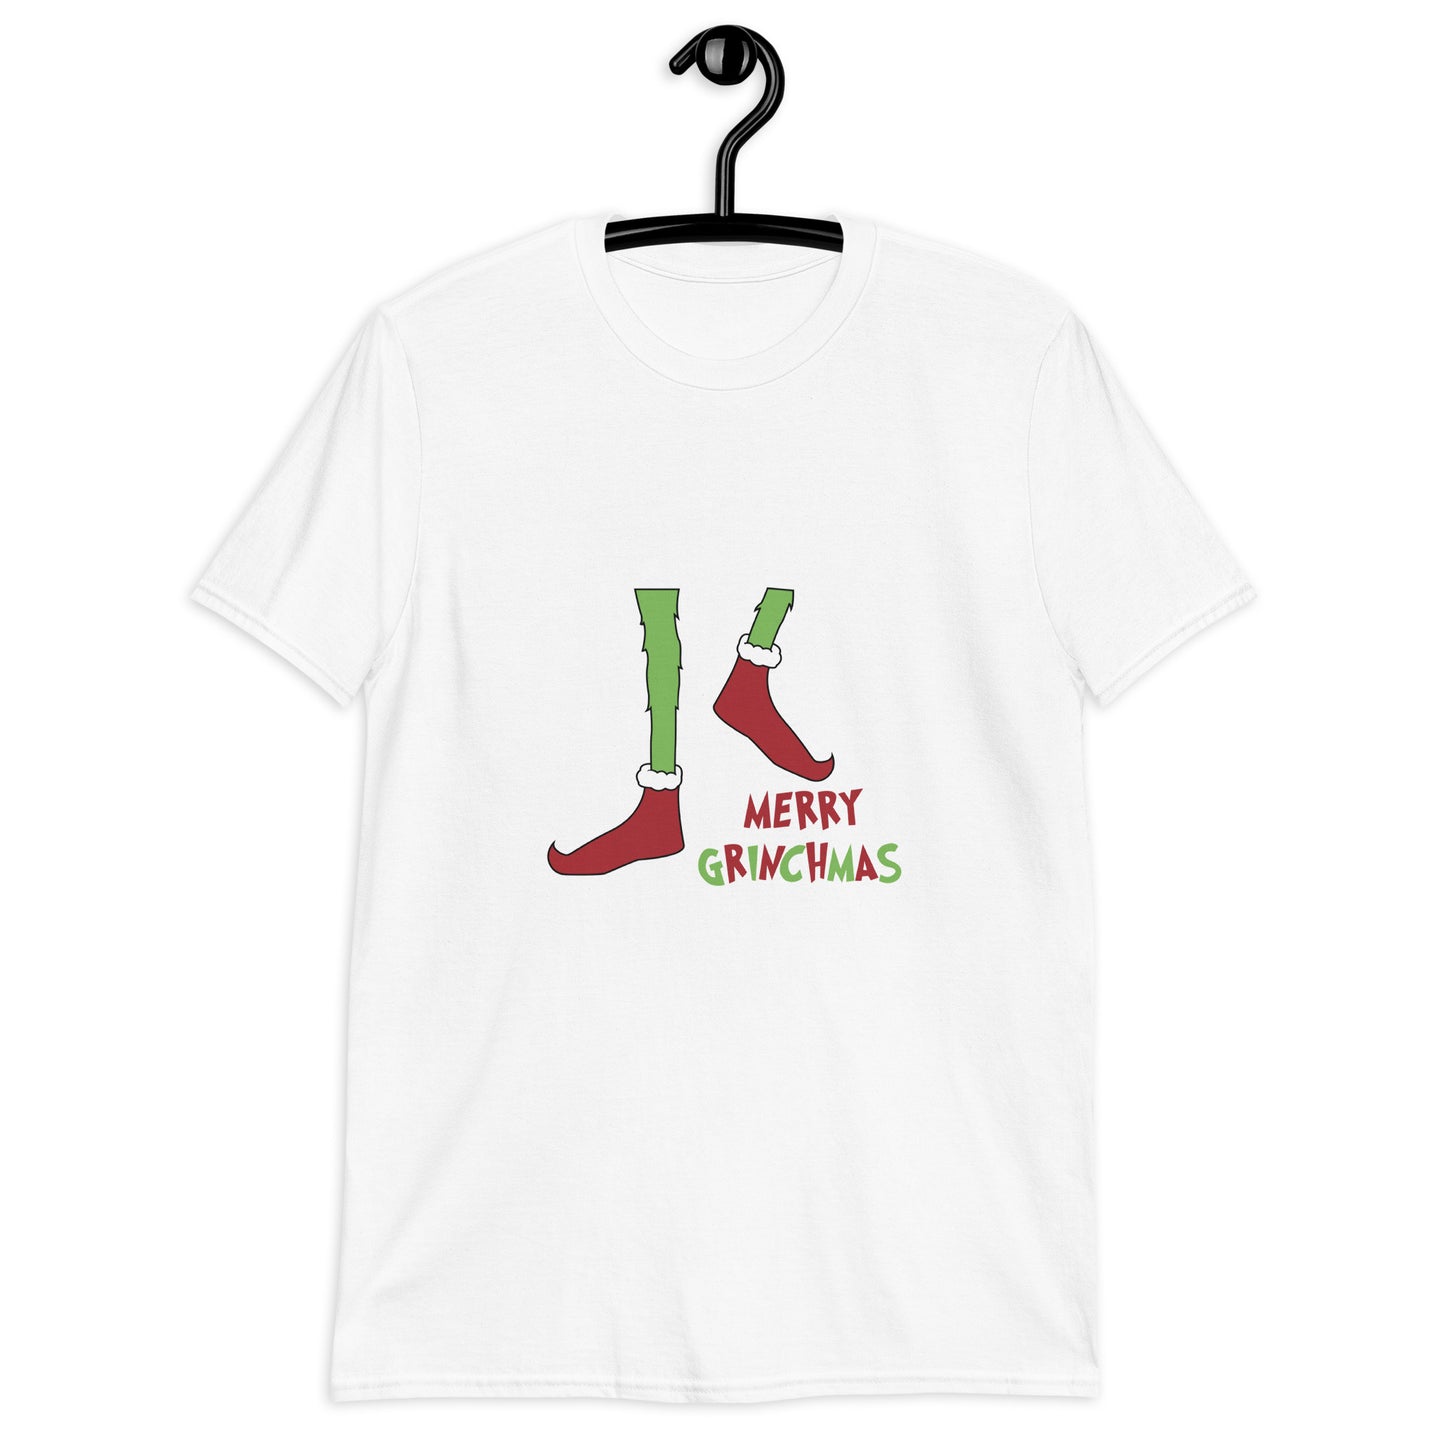 Merry Grinchmas Christmas T-Shirt